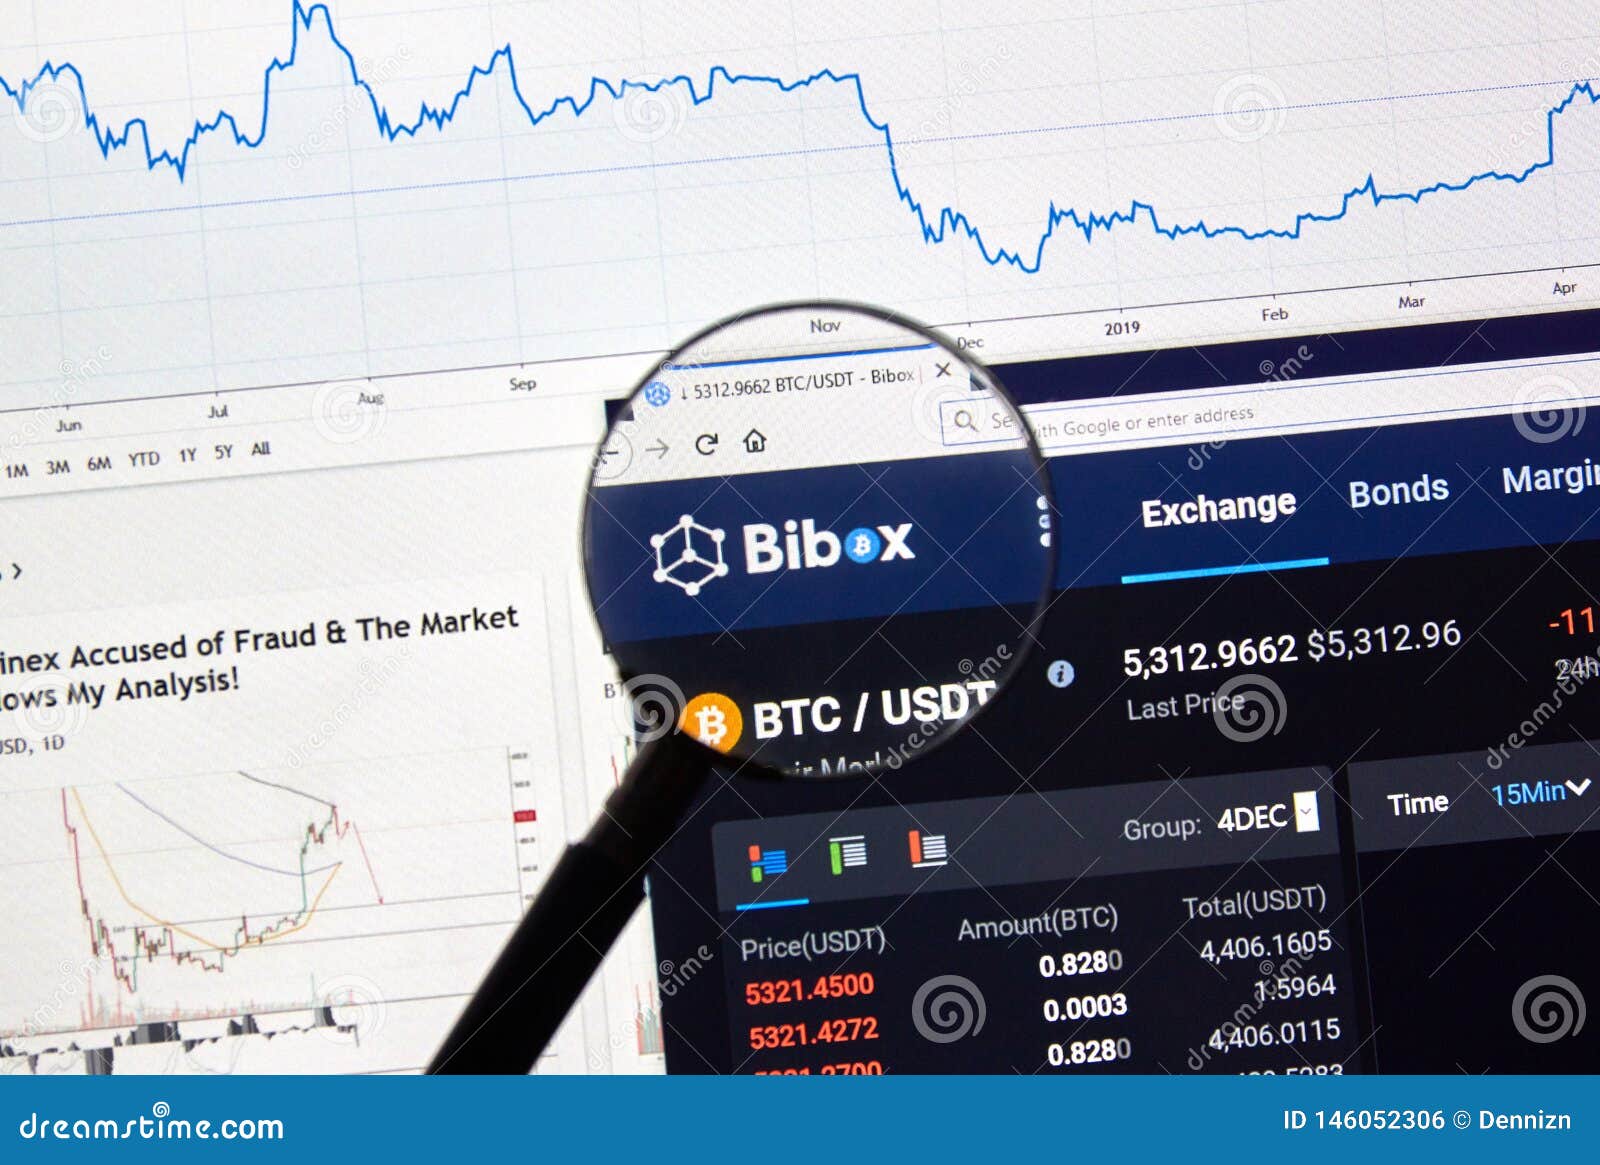 Bibox Cryptocurrency Exchange Site Editorial Photo - Image ...